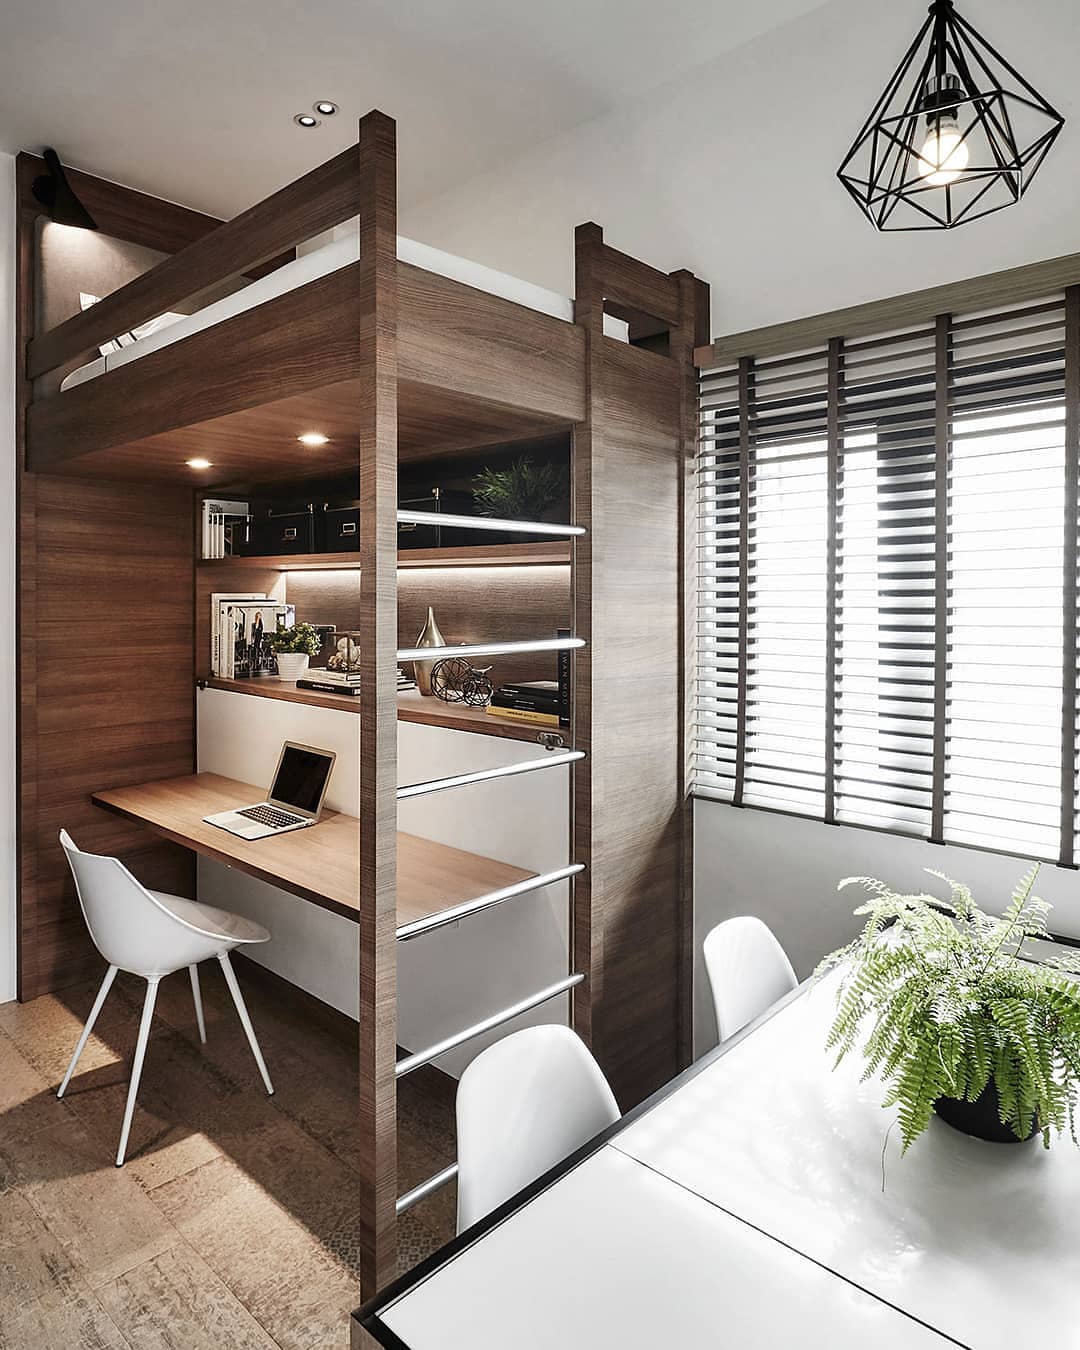 Studio Apartment Loft Bed with Office Below. Photo by Instagram user @iconinteriordesign